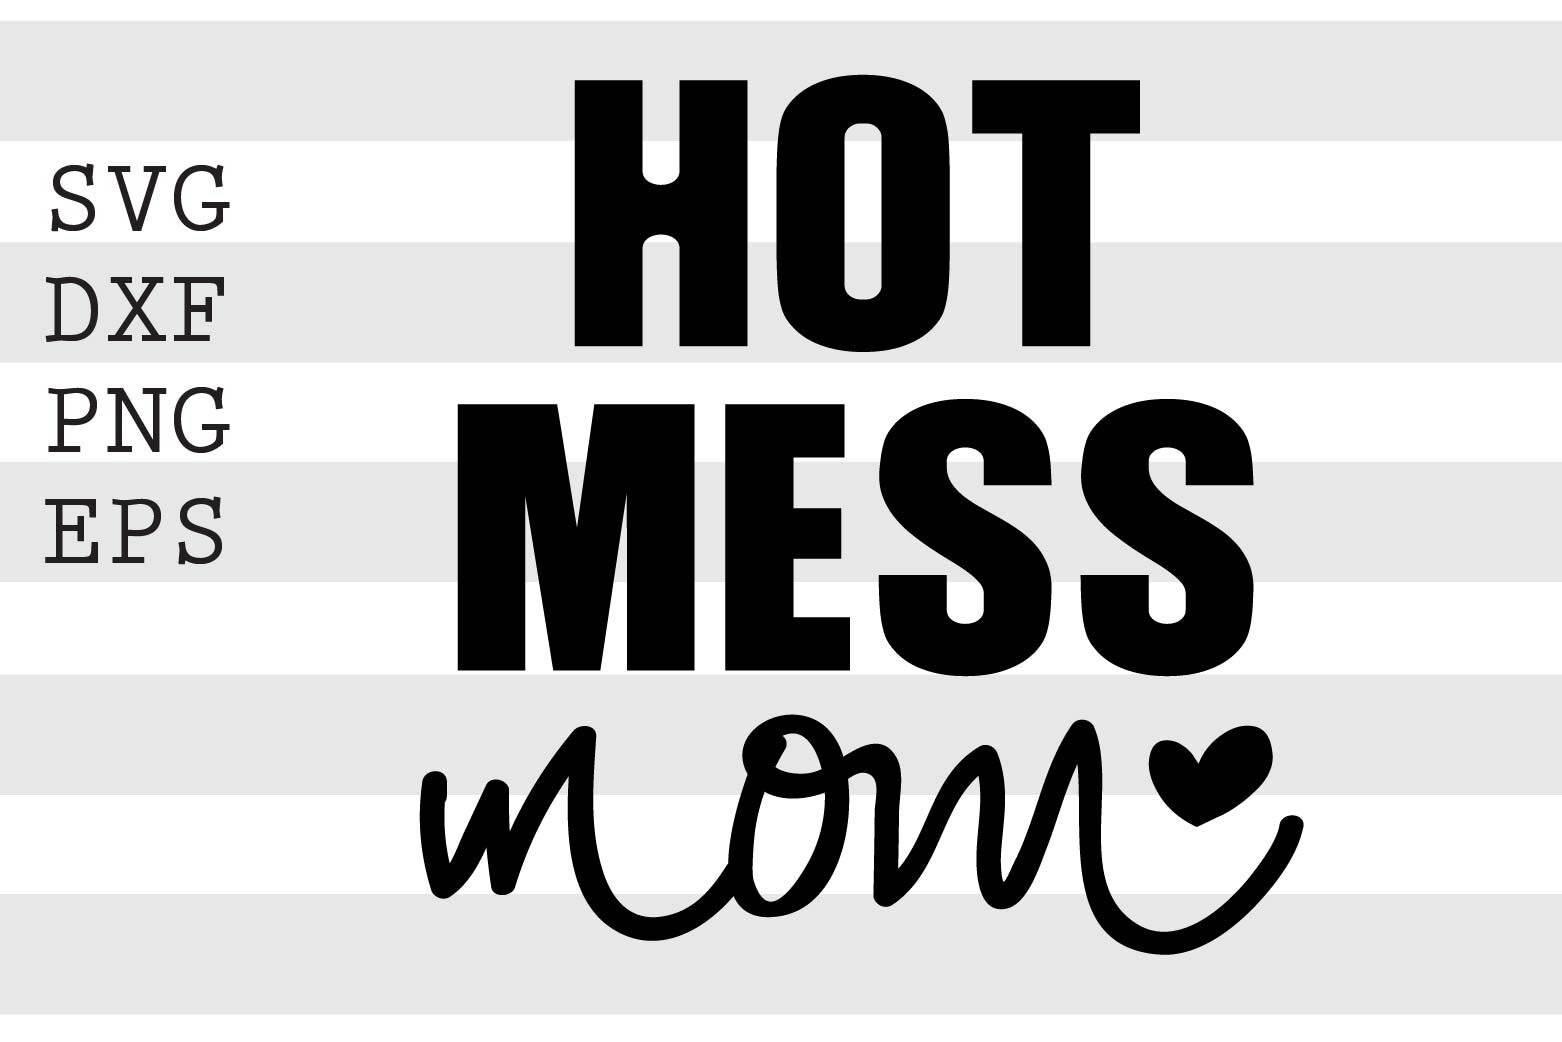 Hot Mama SVG Cut File